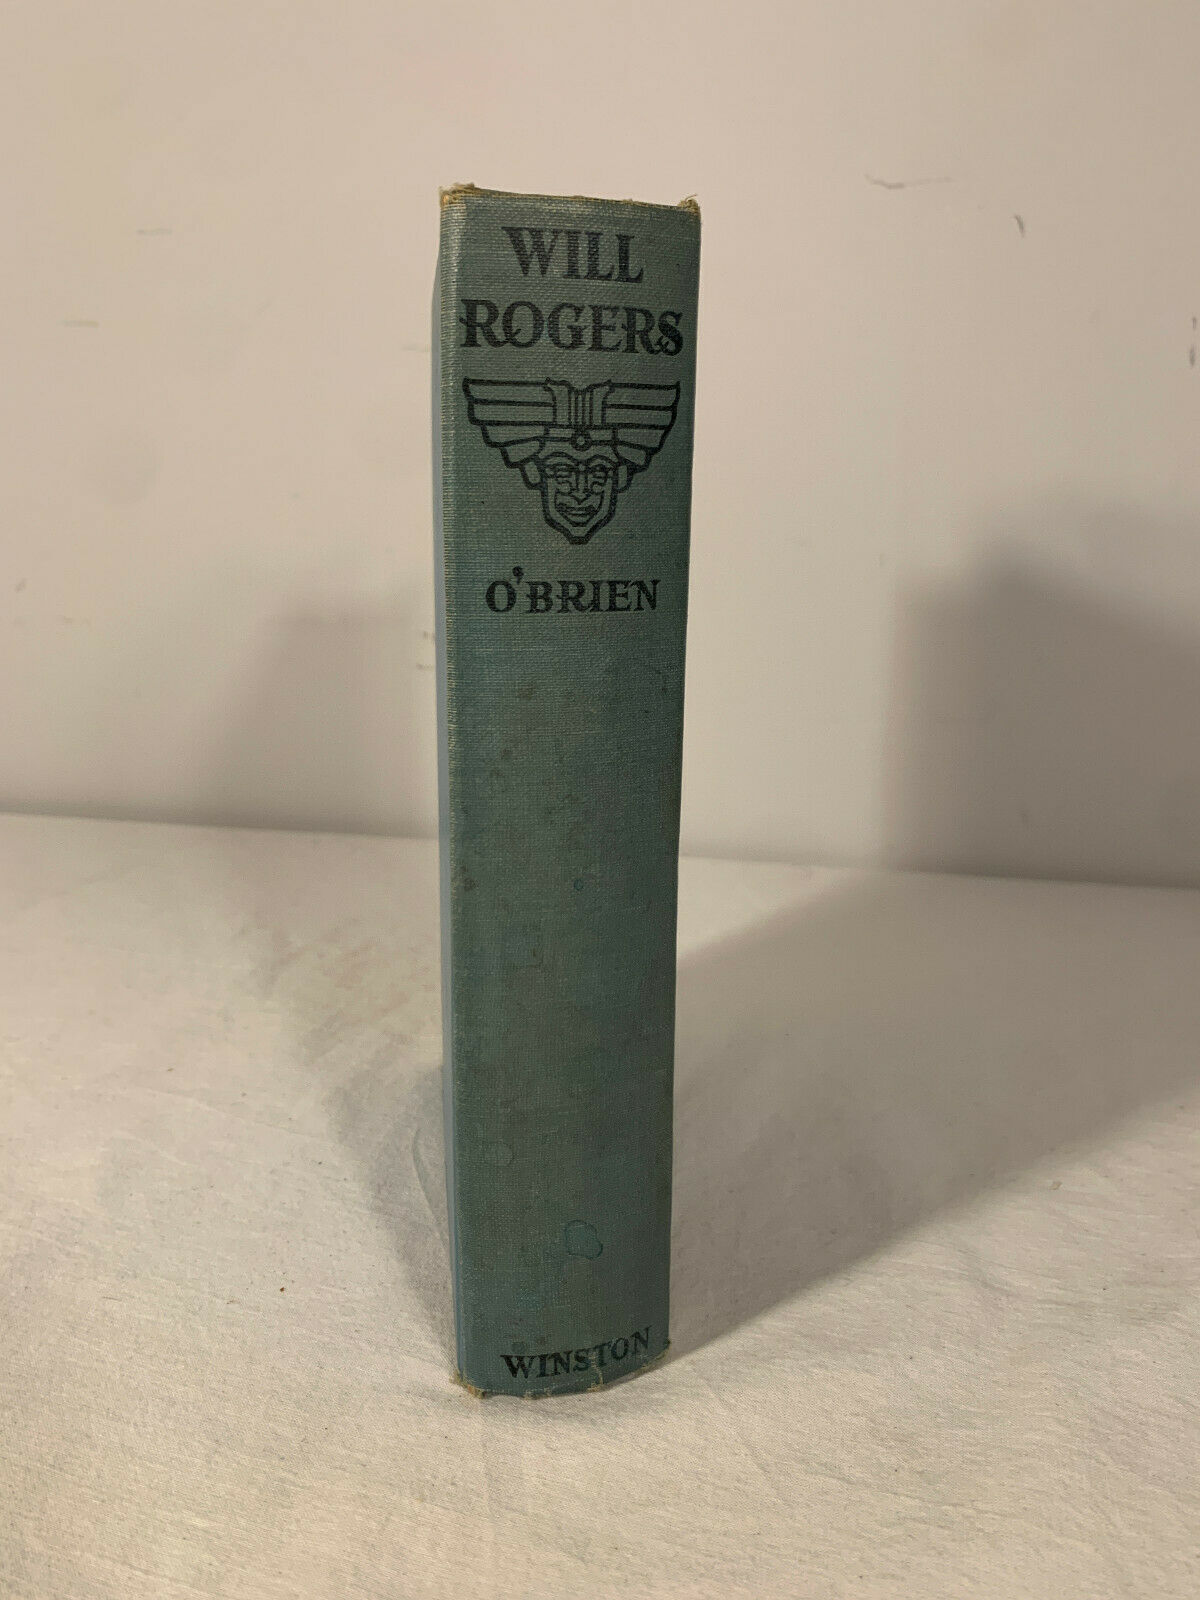 WILL ROGERS  Ambassador of Good Will, Wit & Wisdom 1935 P.J. O'BRIEN HARDCOVER